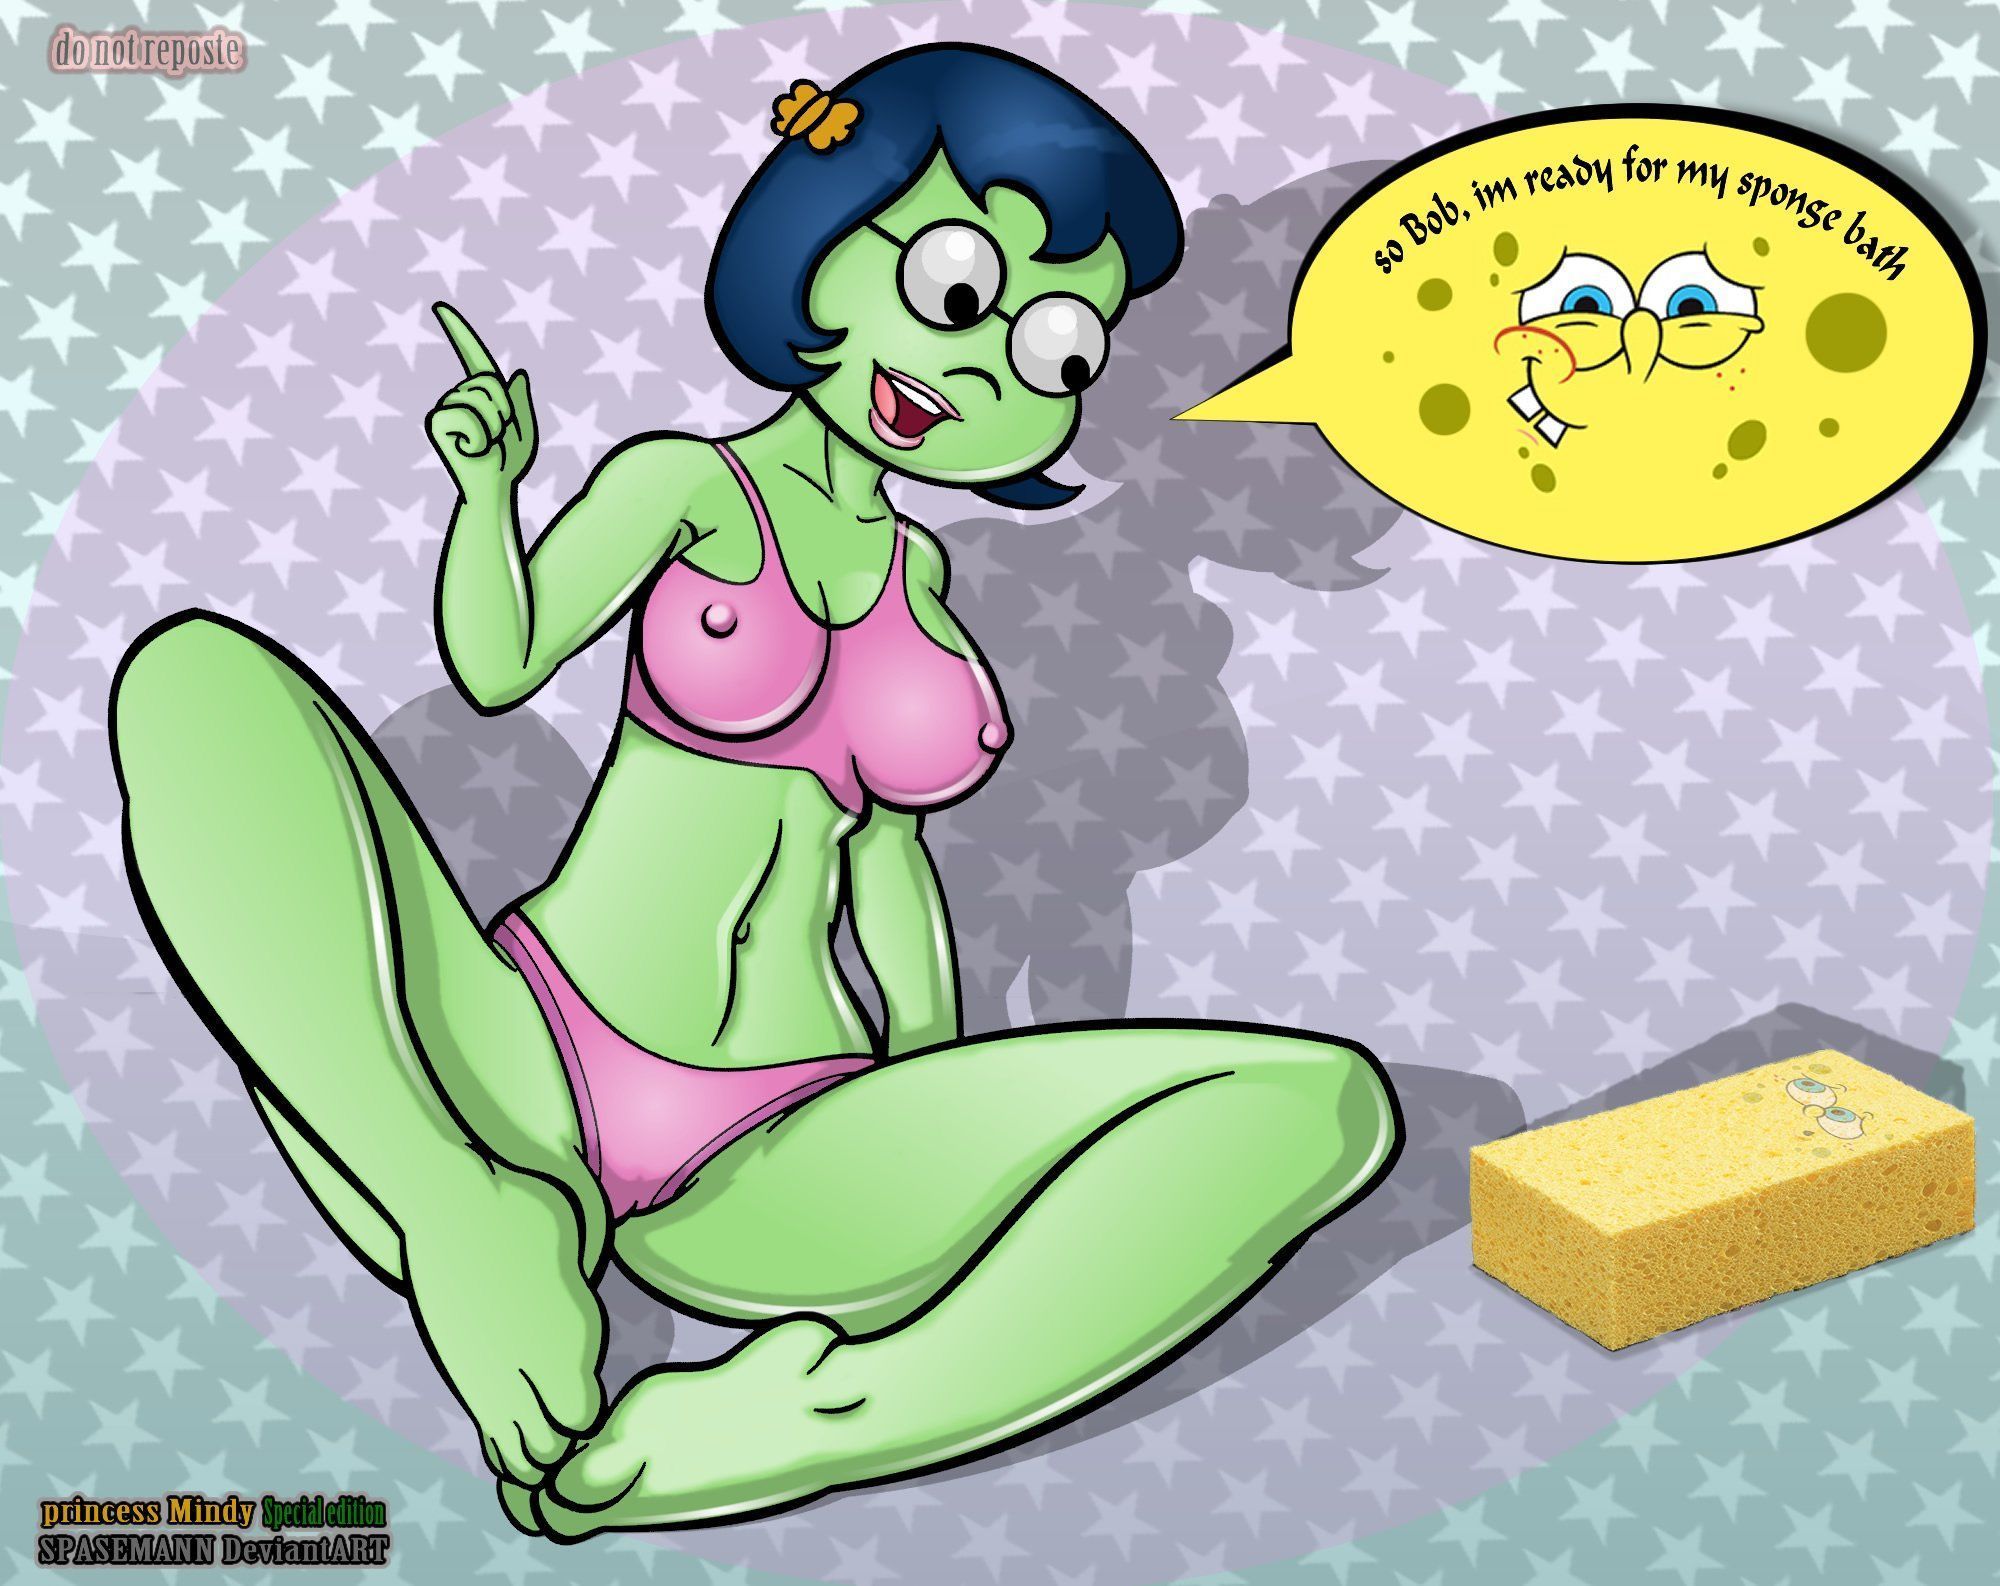 Naked women spongebob boobs